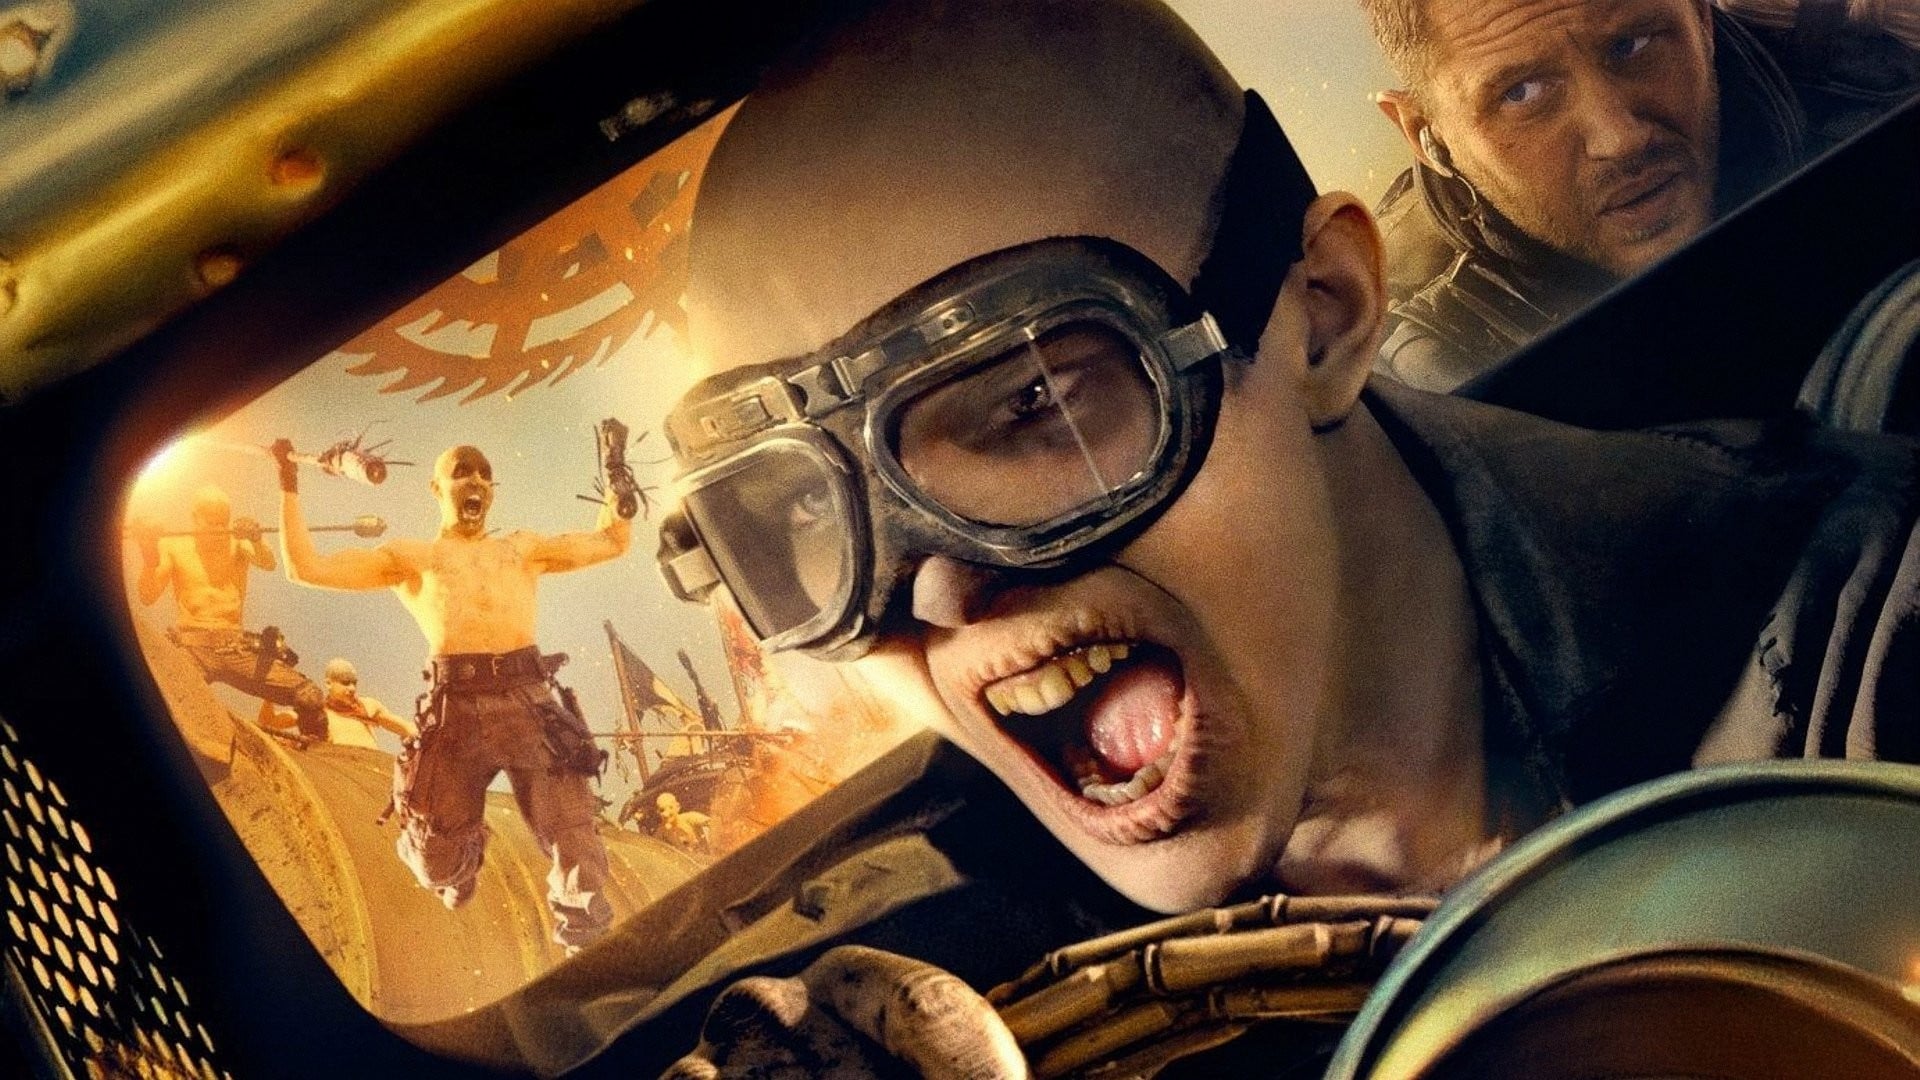 Image du film Mad Max : Fury Road 5rrrdwf4jwn9zps1ou7tbueejxtjpg